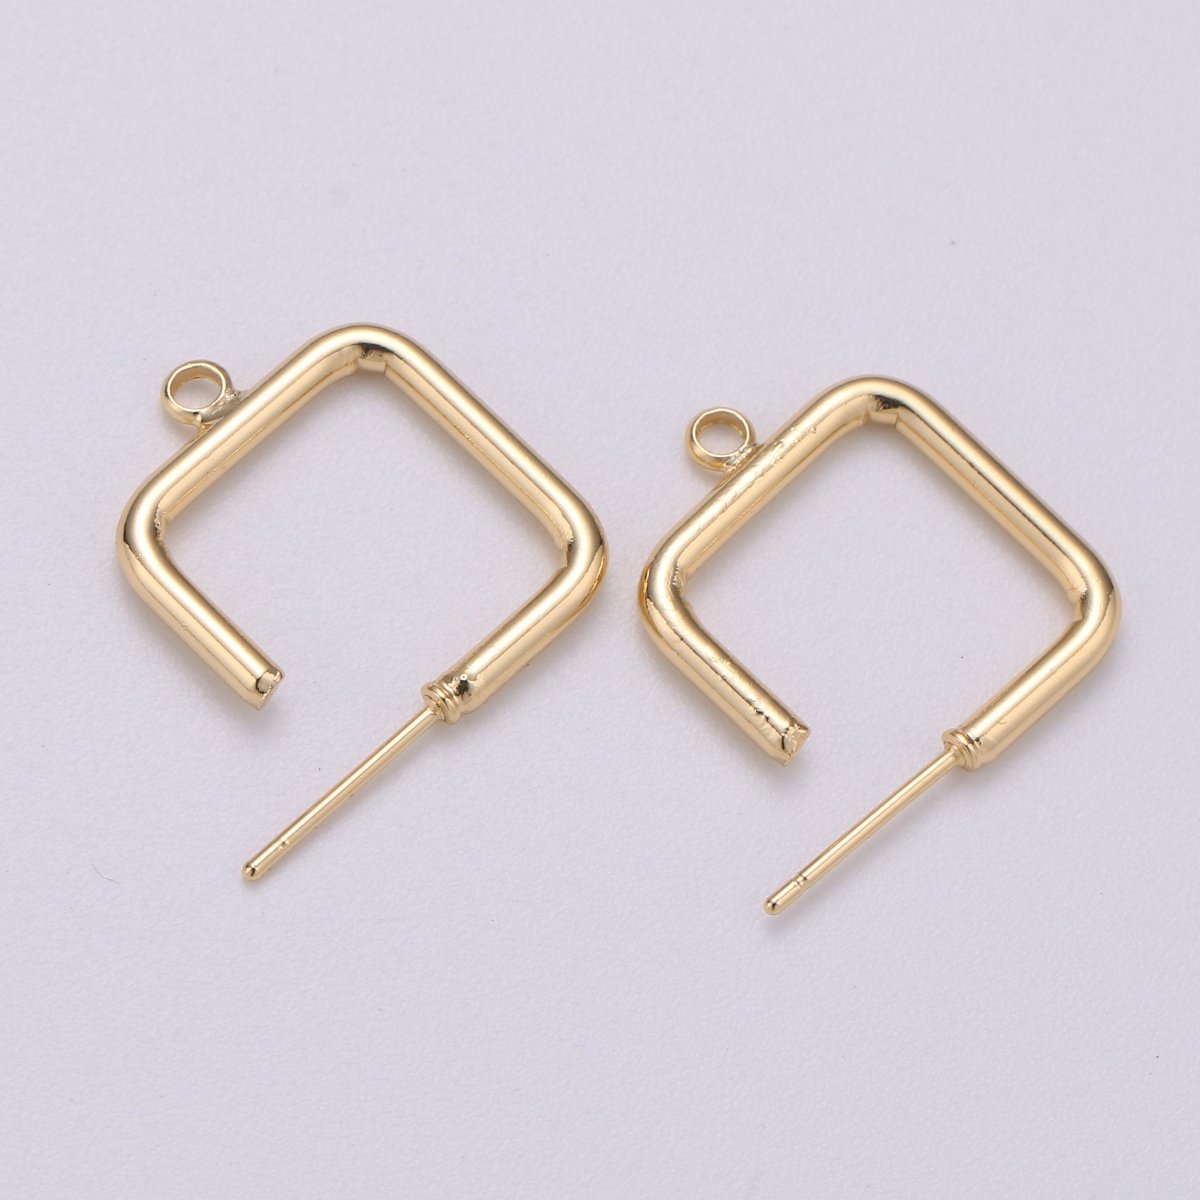 2pcs Open Ear Hoop Square Earring Hoop Findings for Necklace Jewelry Making in 18k Gold Filled K-039 - DLUXCA